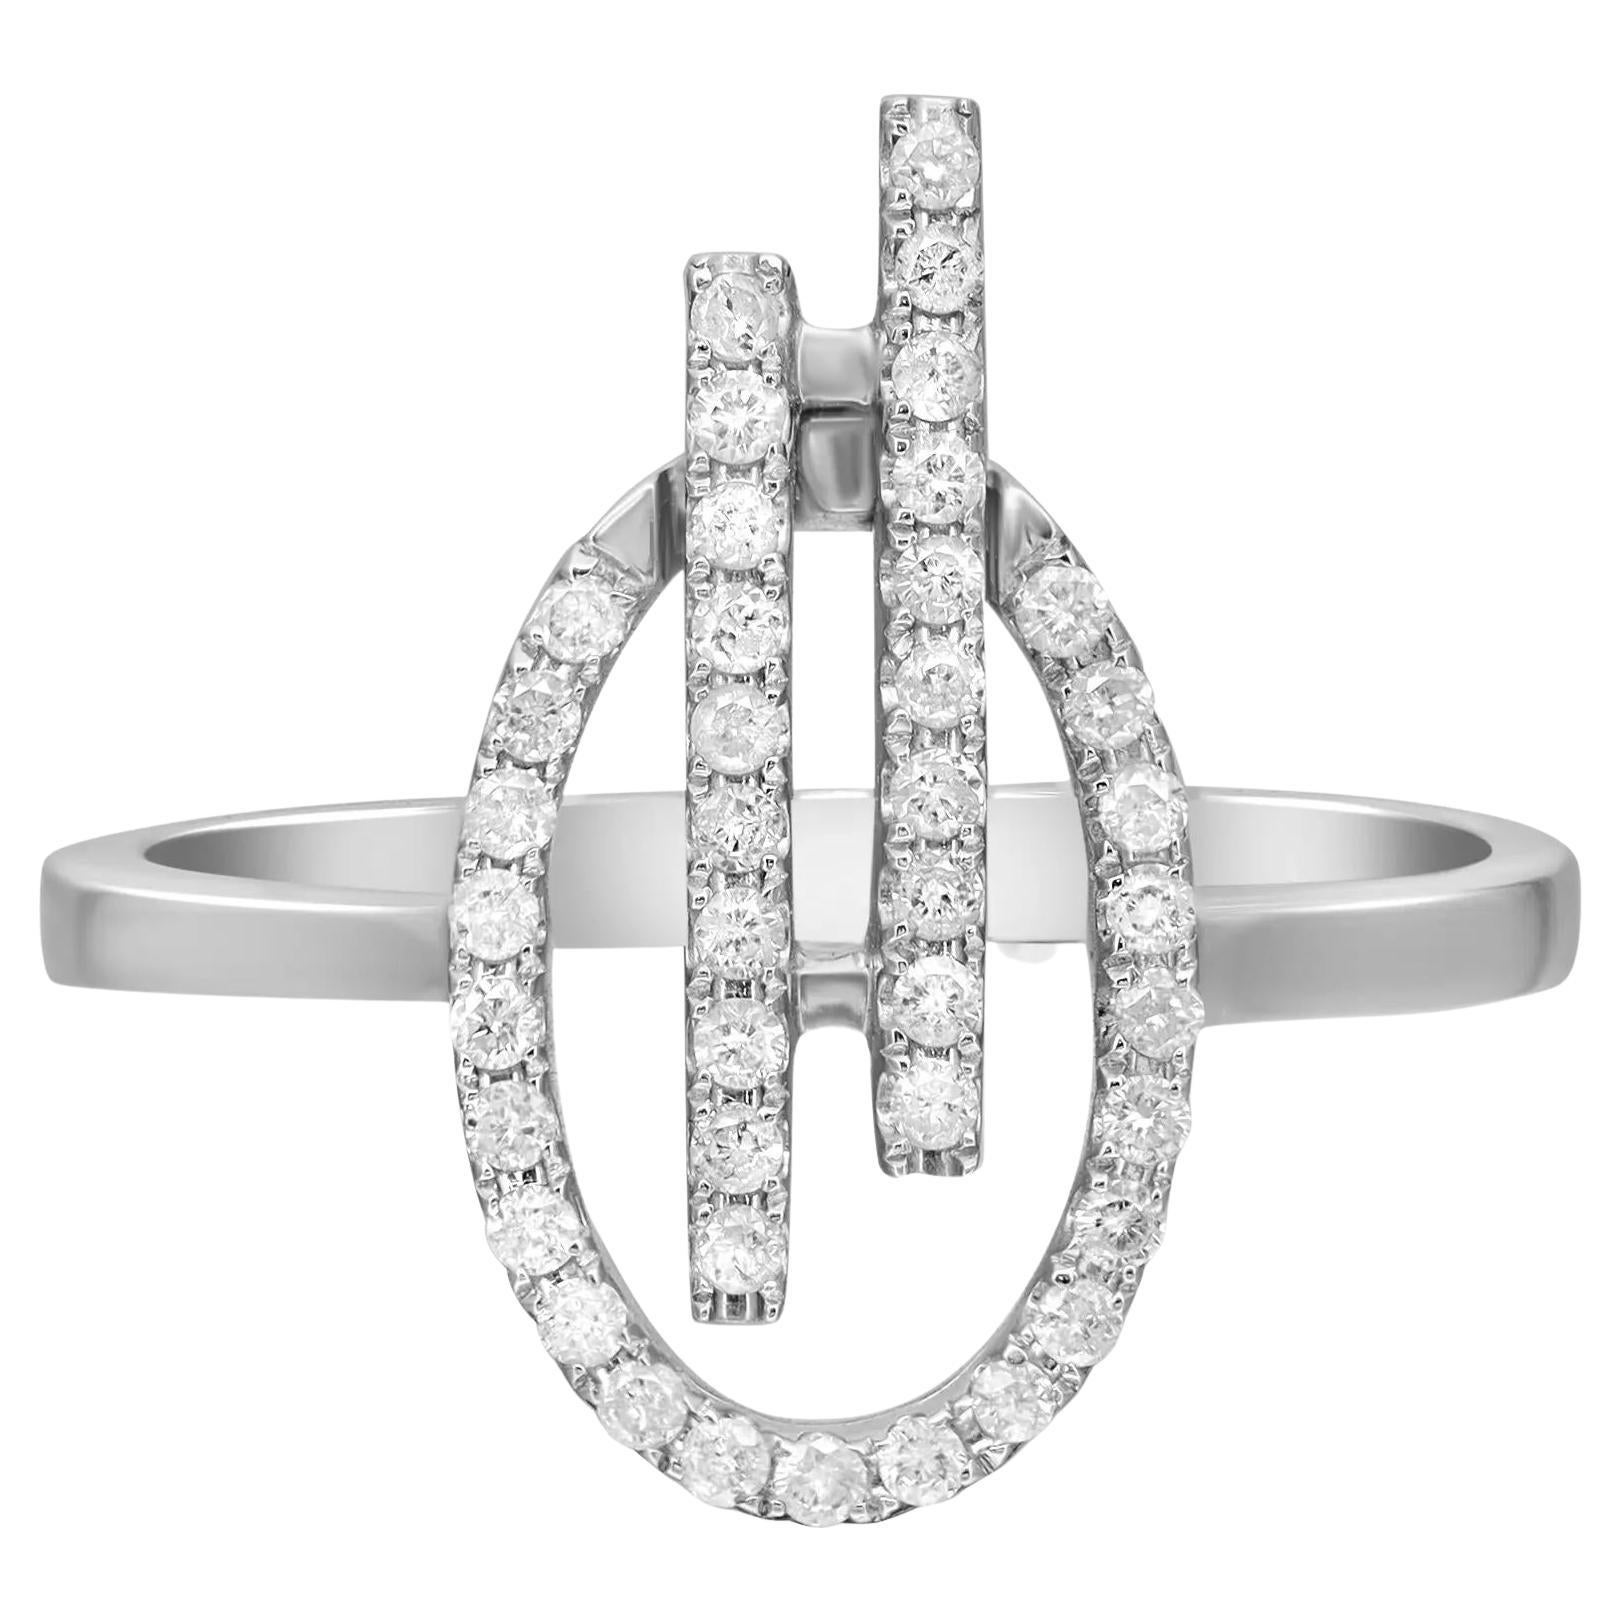 0.27Cttw Round Cut Diamond Ladies Fashion Ring 14K White Gold Size 7.5 For Sale